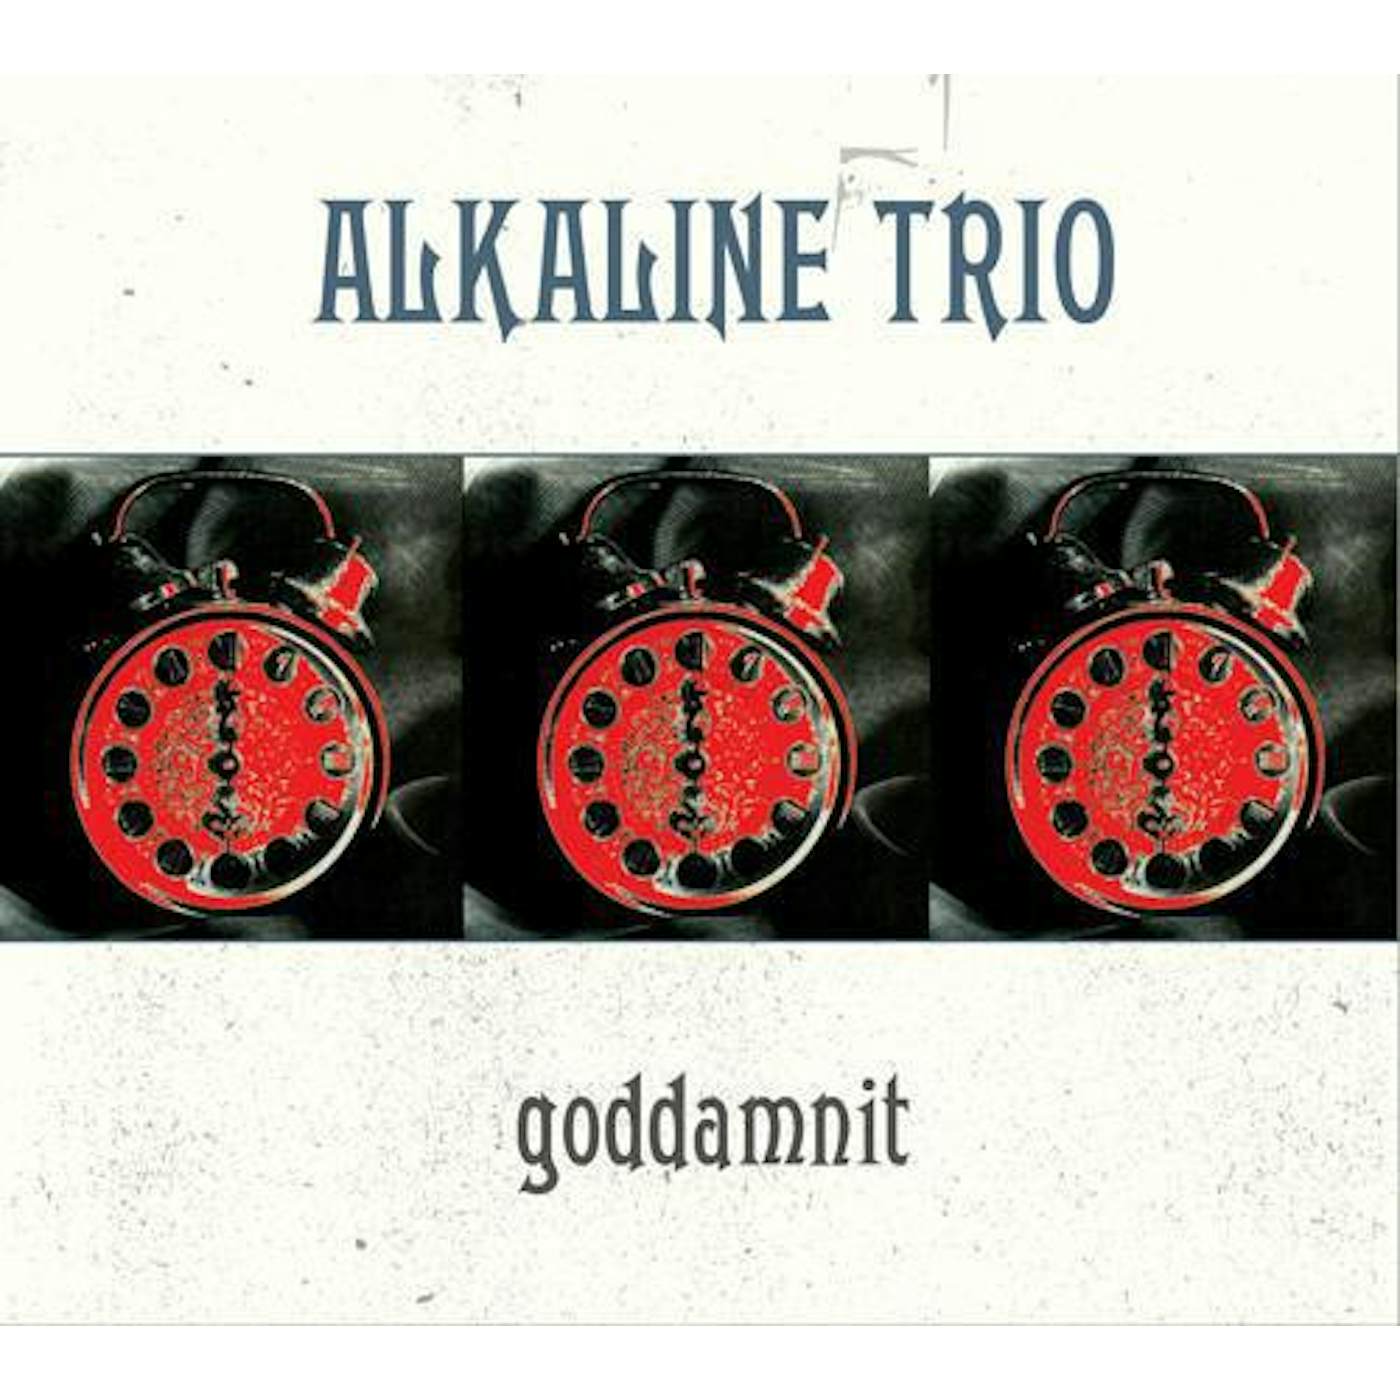 Alkaline Trio Goddamnit Vinyl Record